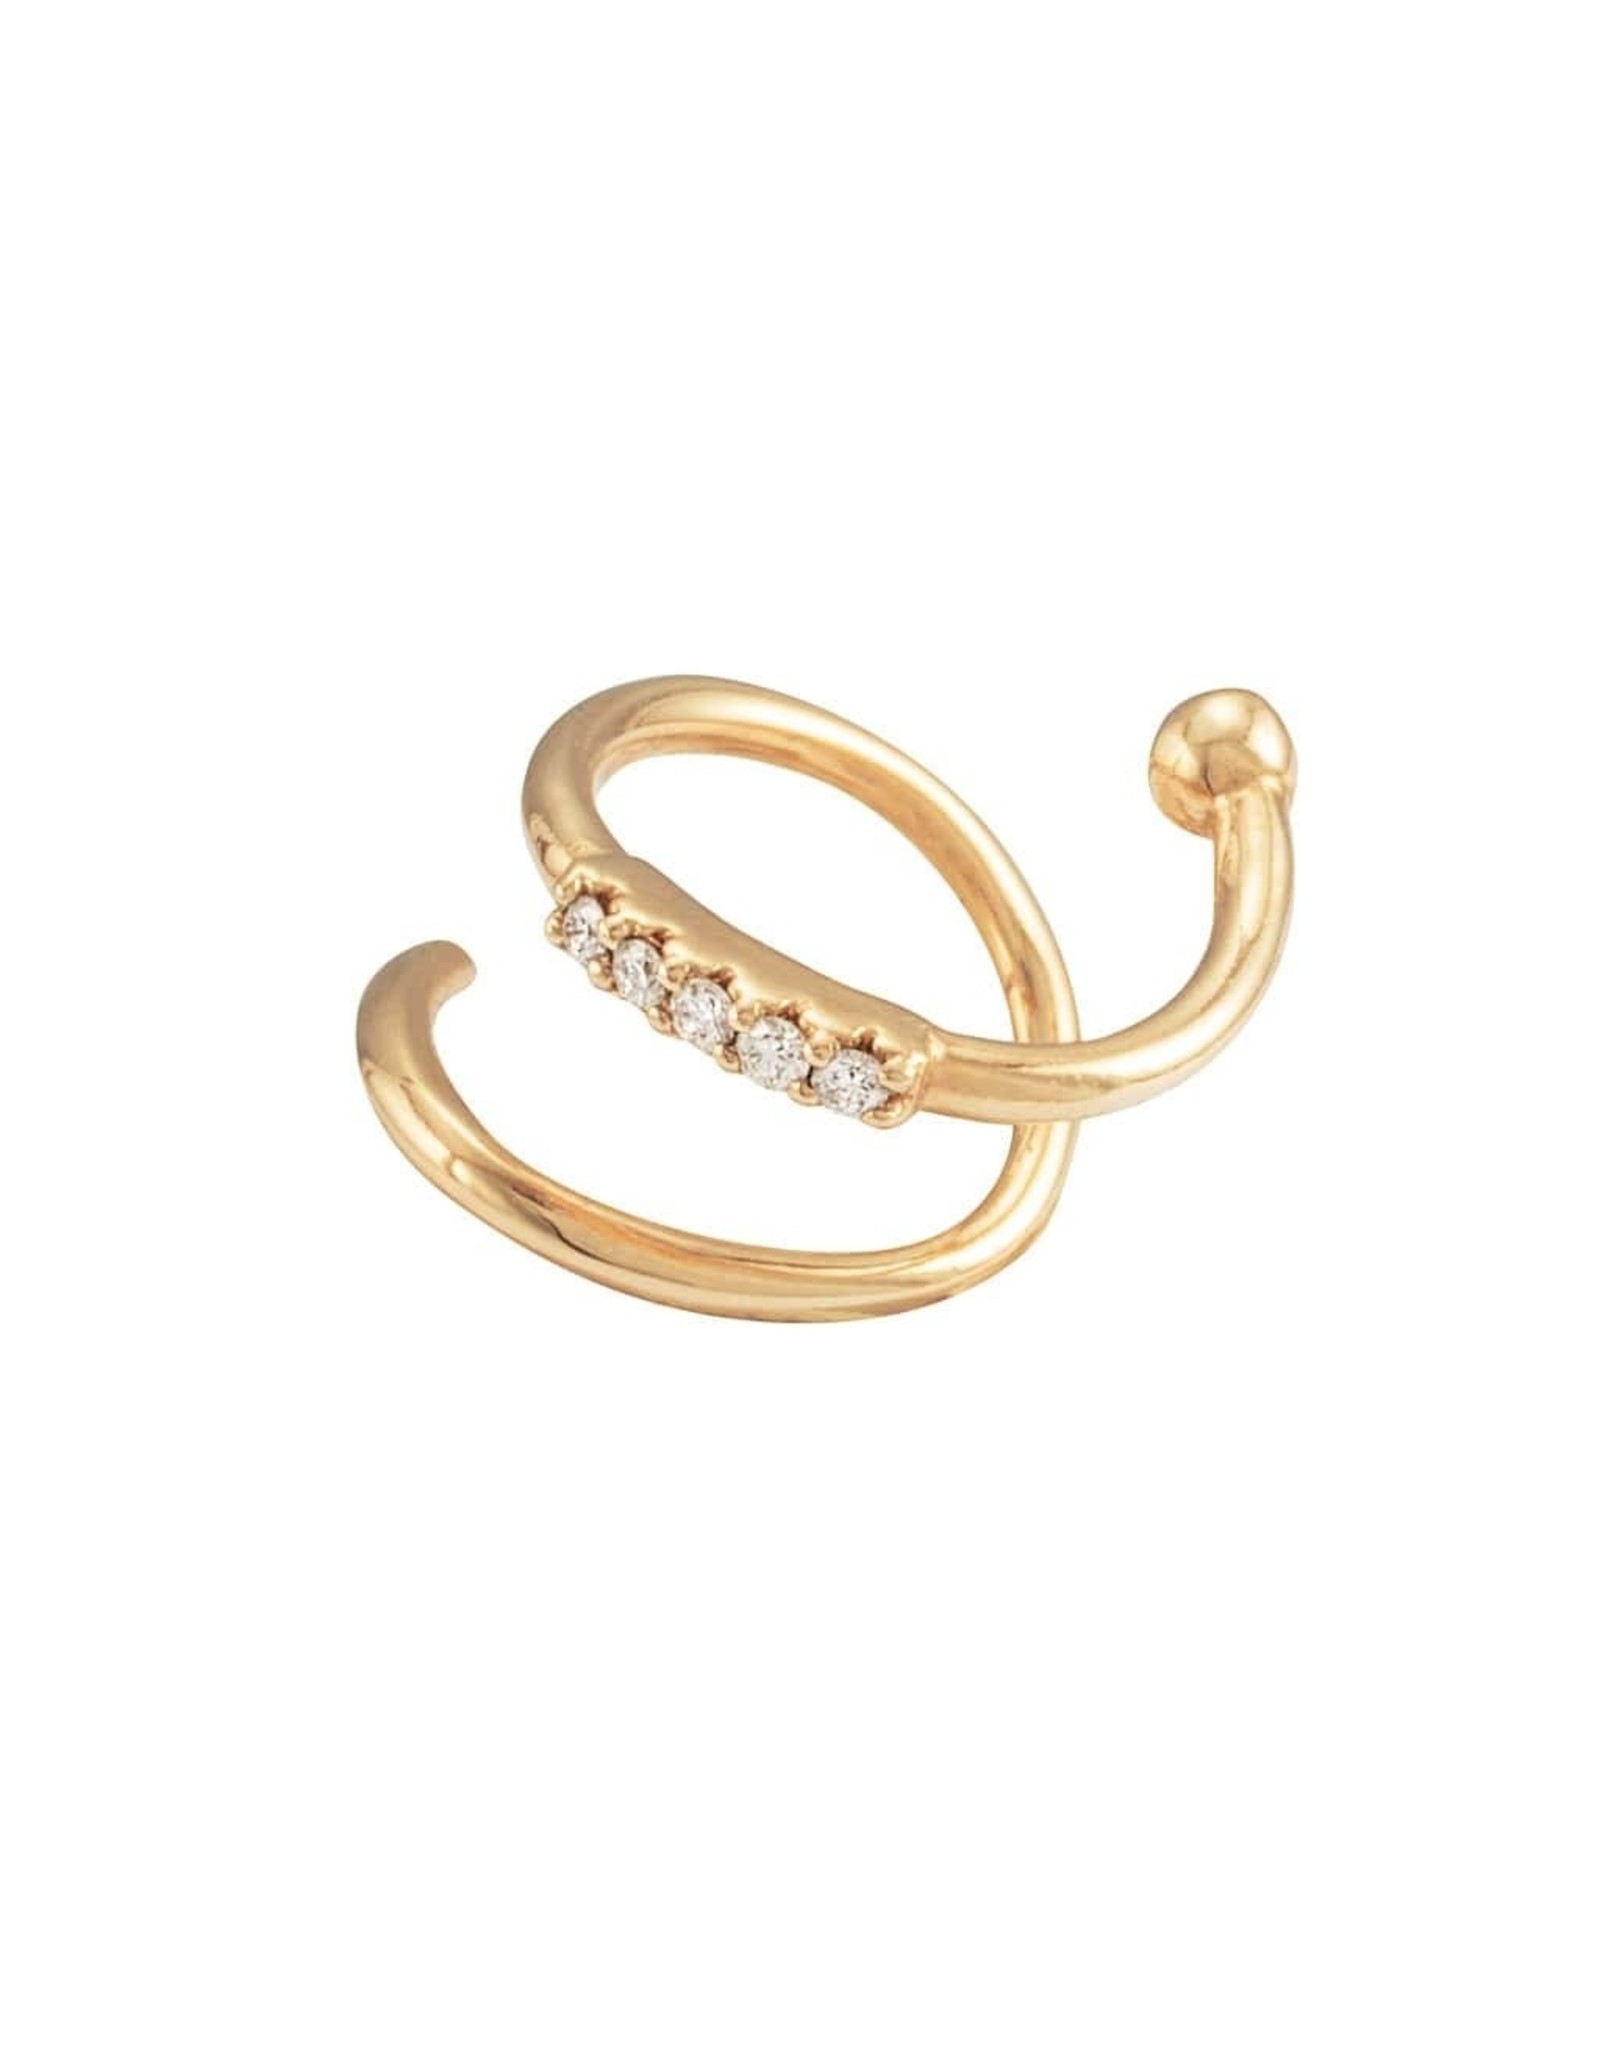 Sansoeurs Big snake diamonds gold earring (left ear)